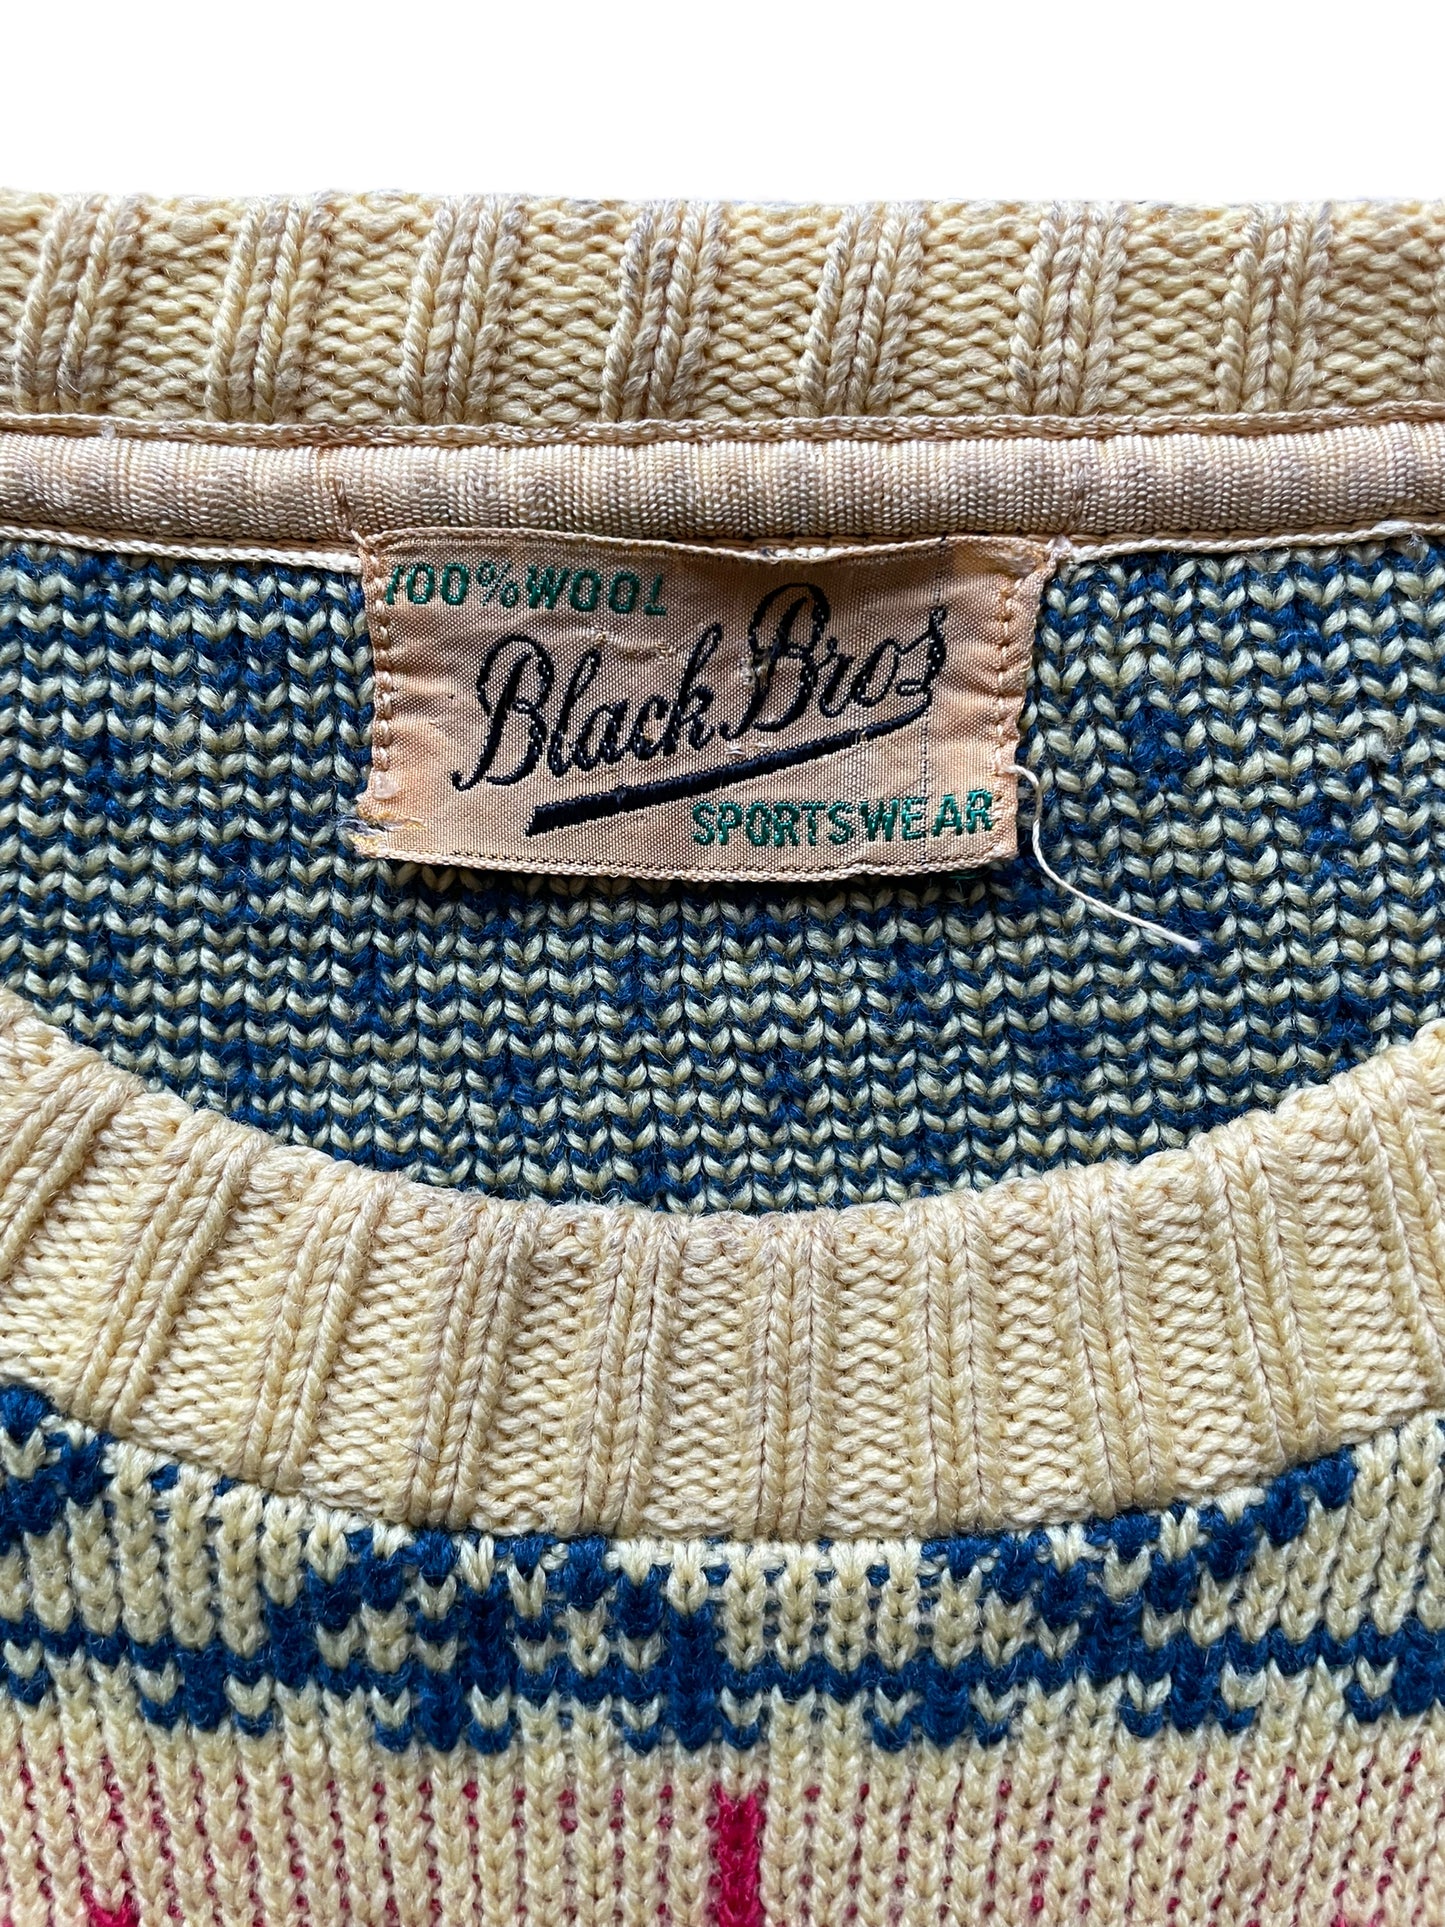 Tag view of Vintage 1940s Black Bros  Ski Sweater